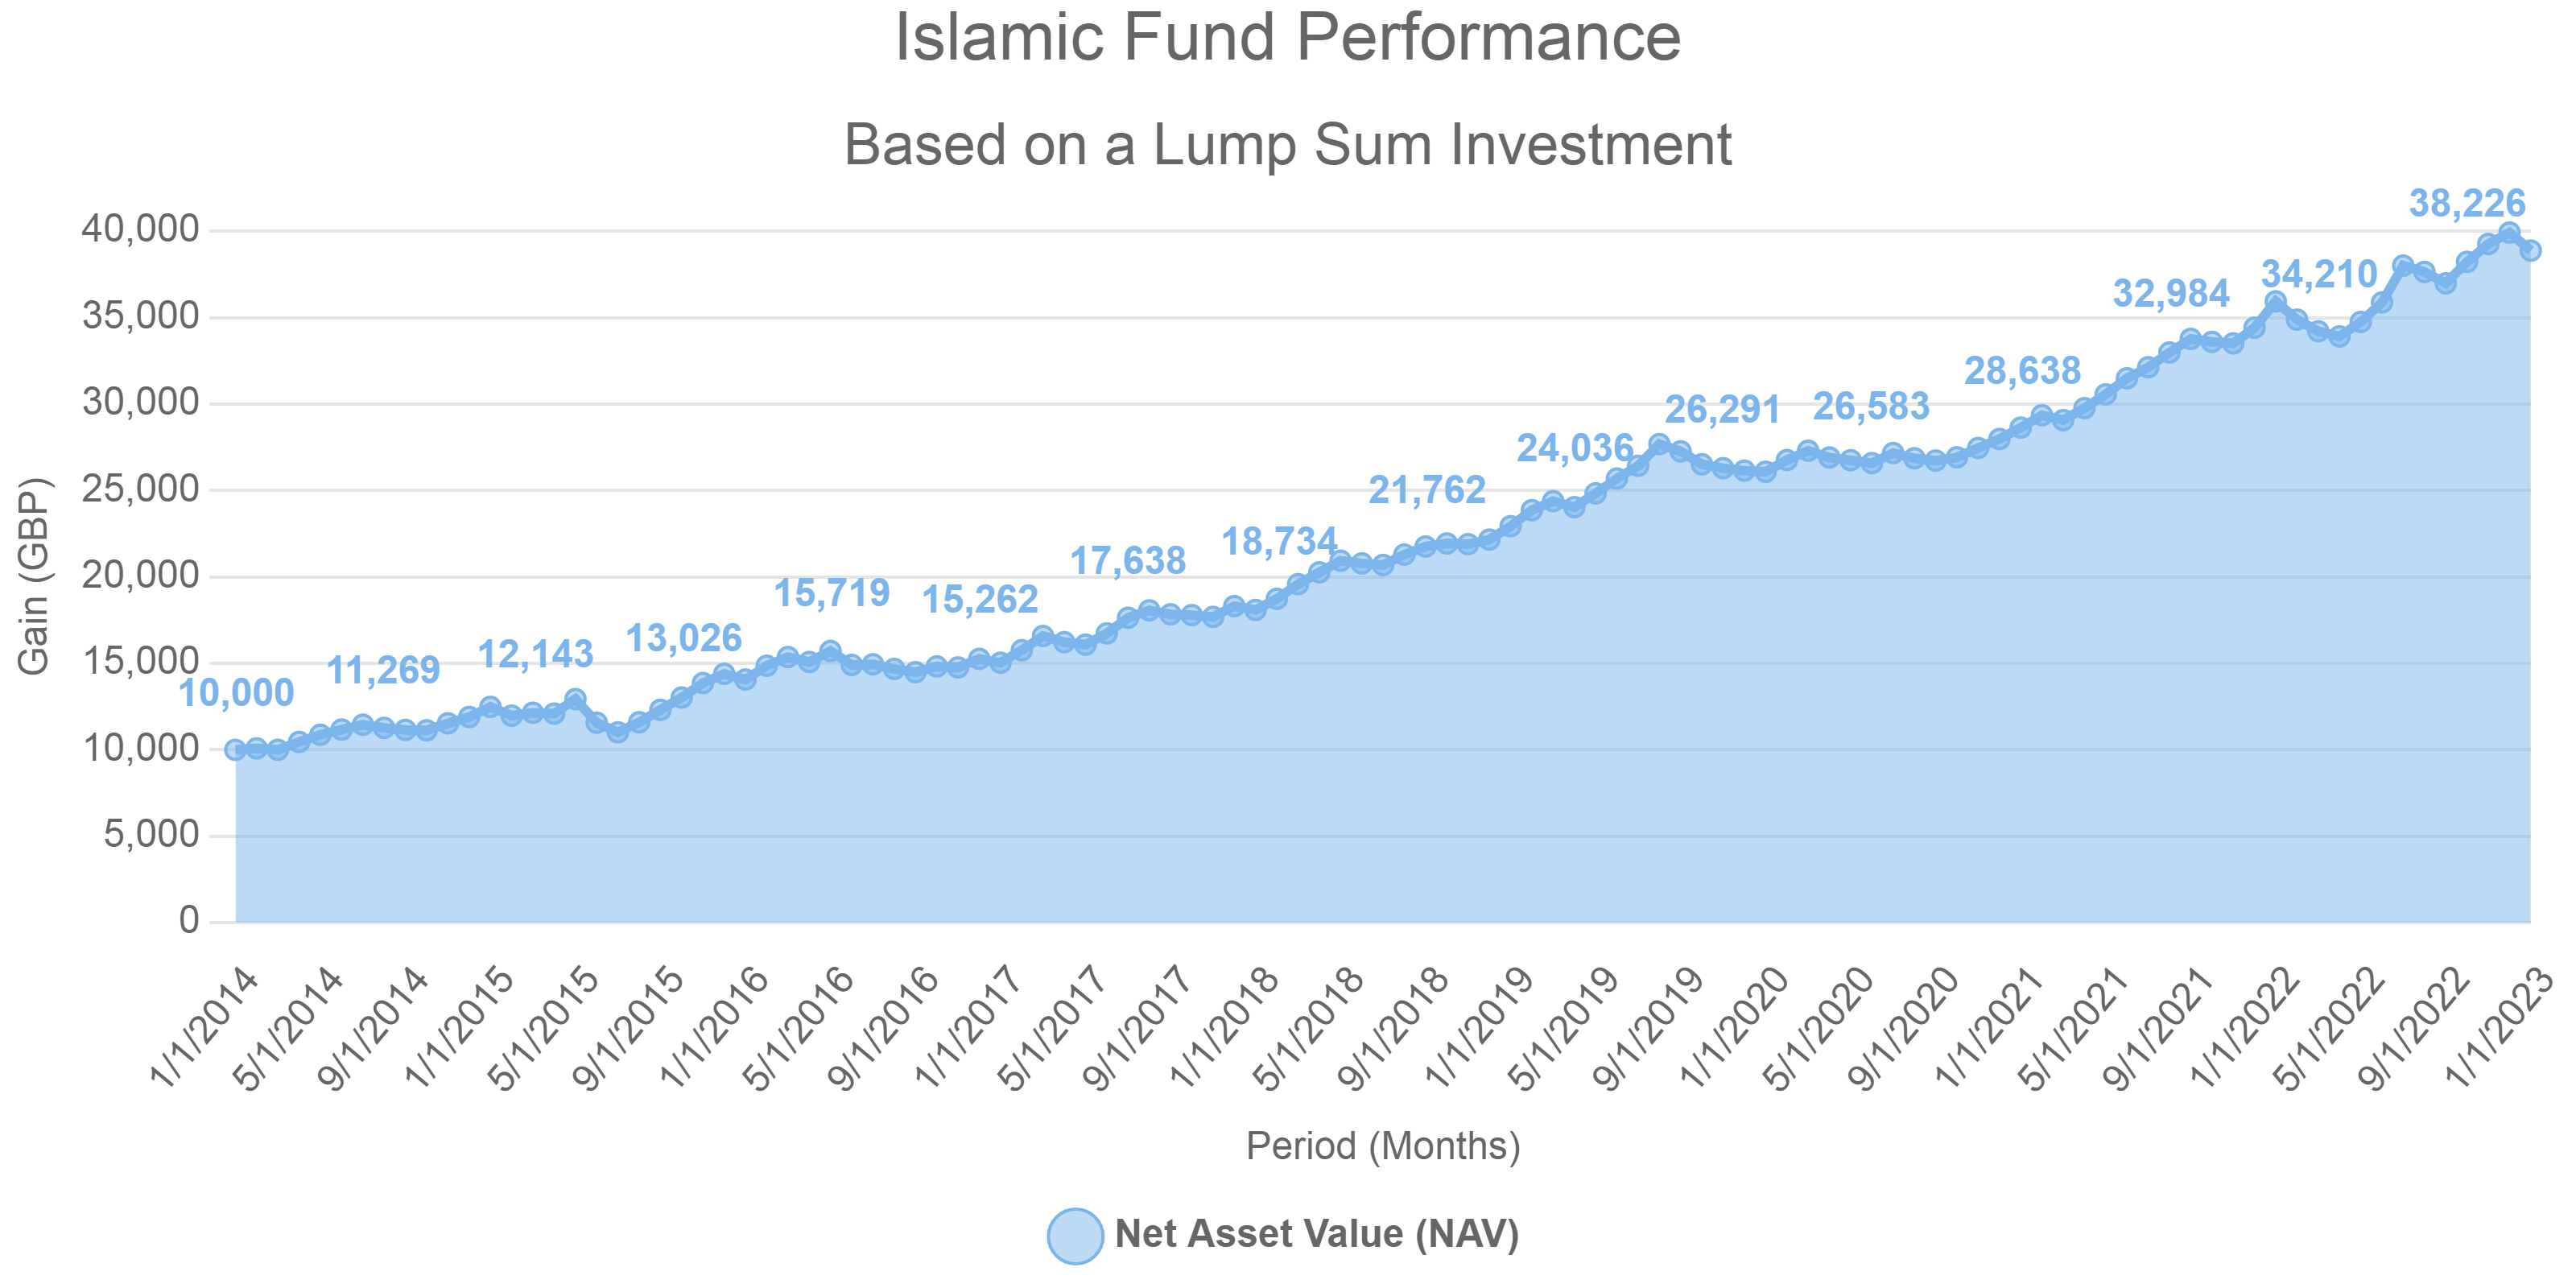 Islamic Fund Performance